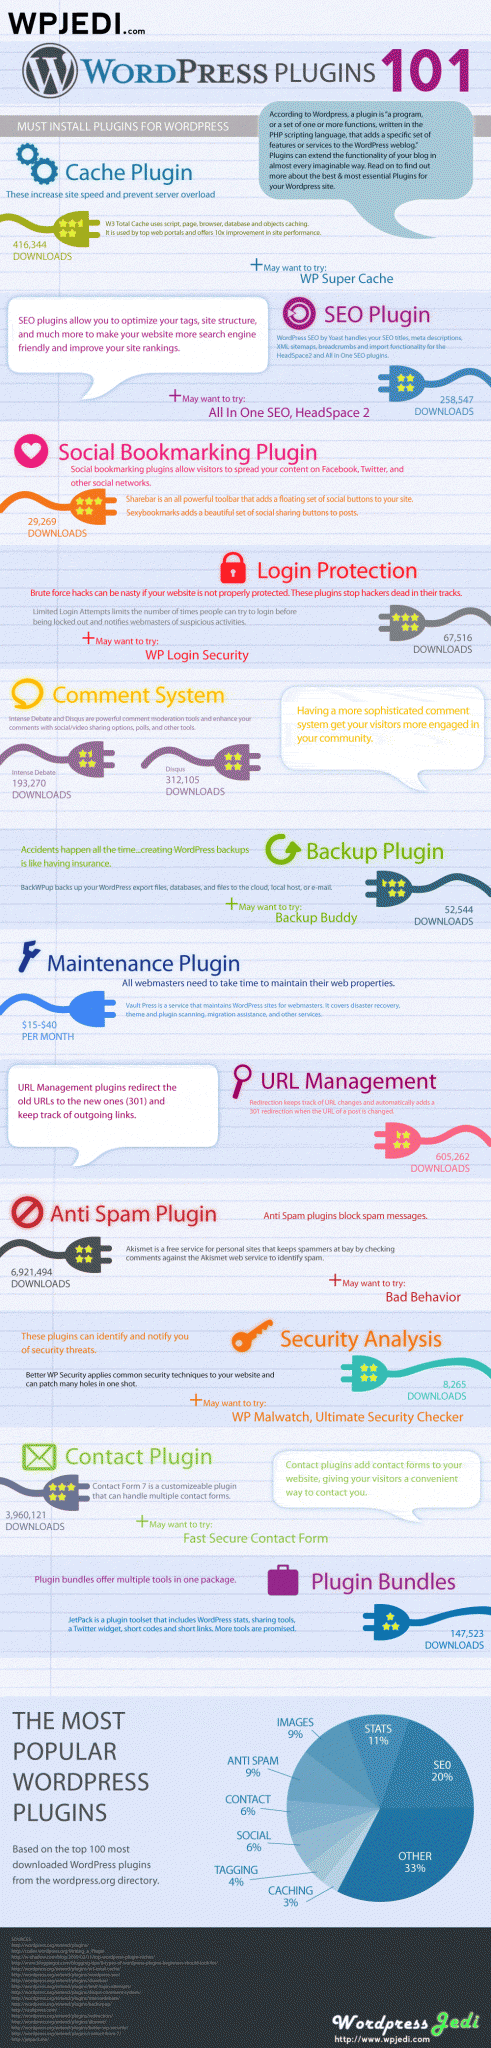 Infographic: WordPress plugins 101